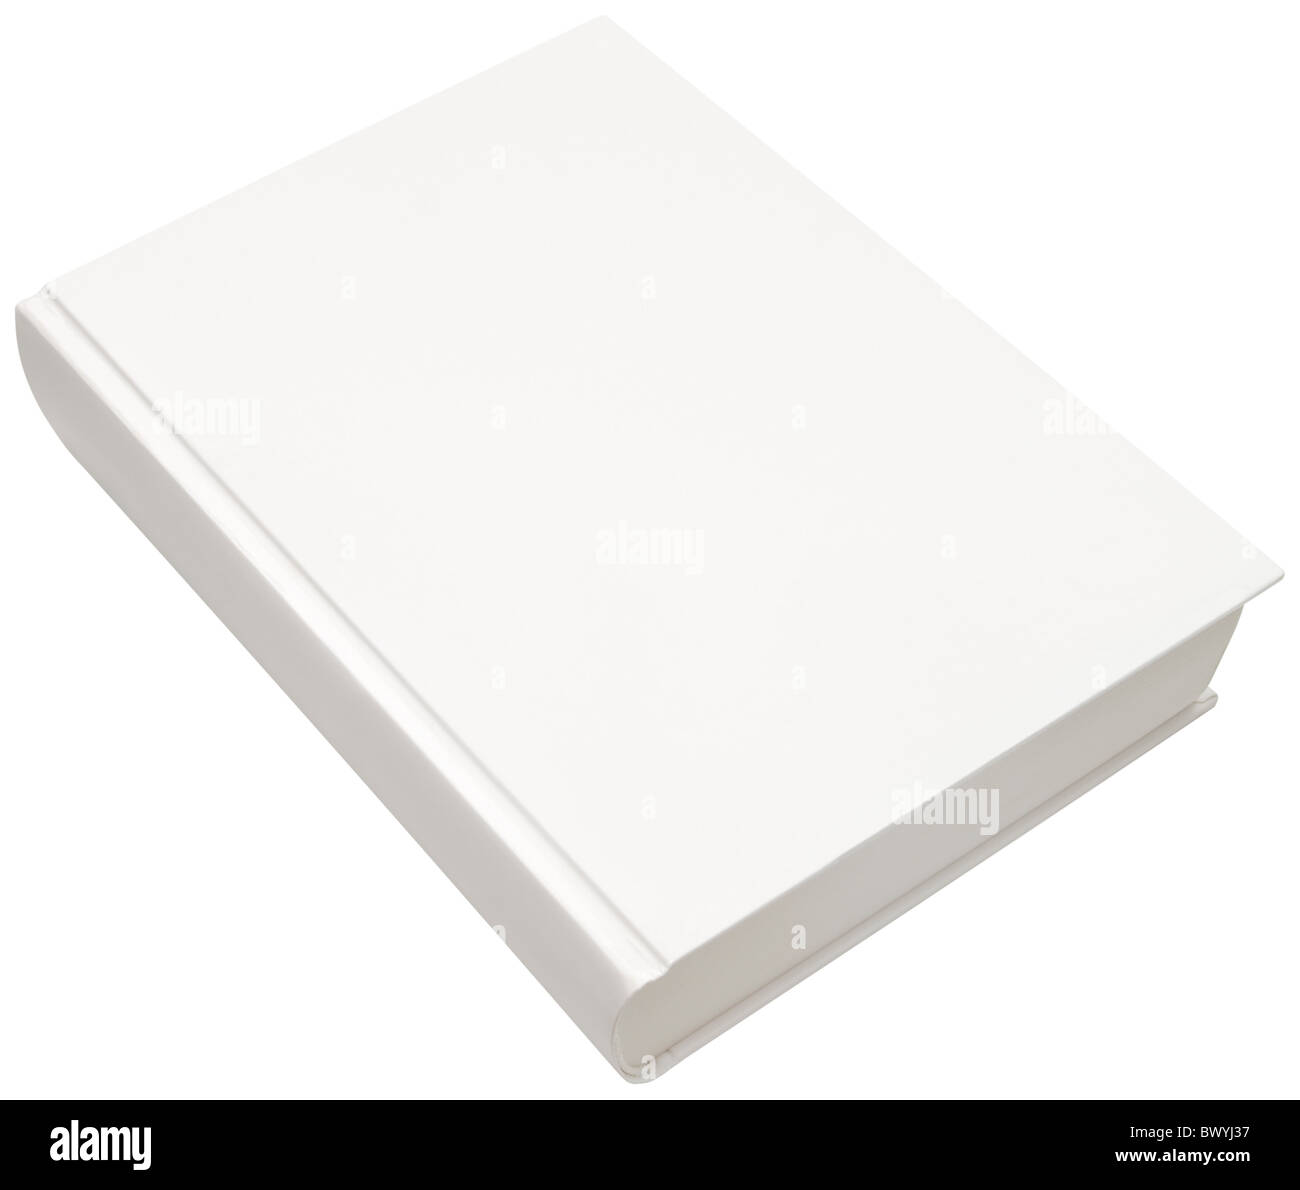 Recorte de blanco vacío duro modelo de tapa de libro aislada con trazado de recorte Foto de stock